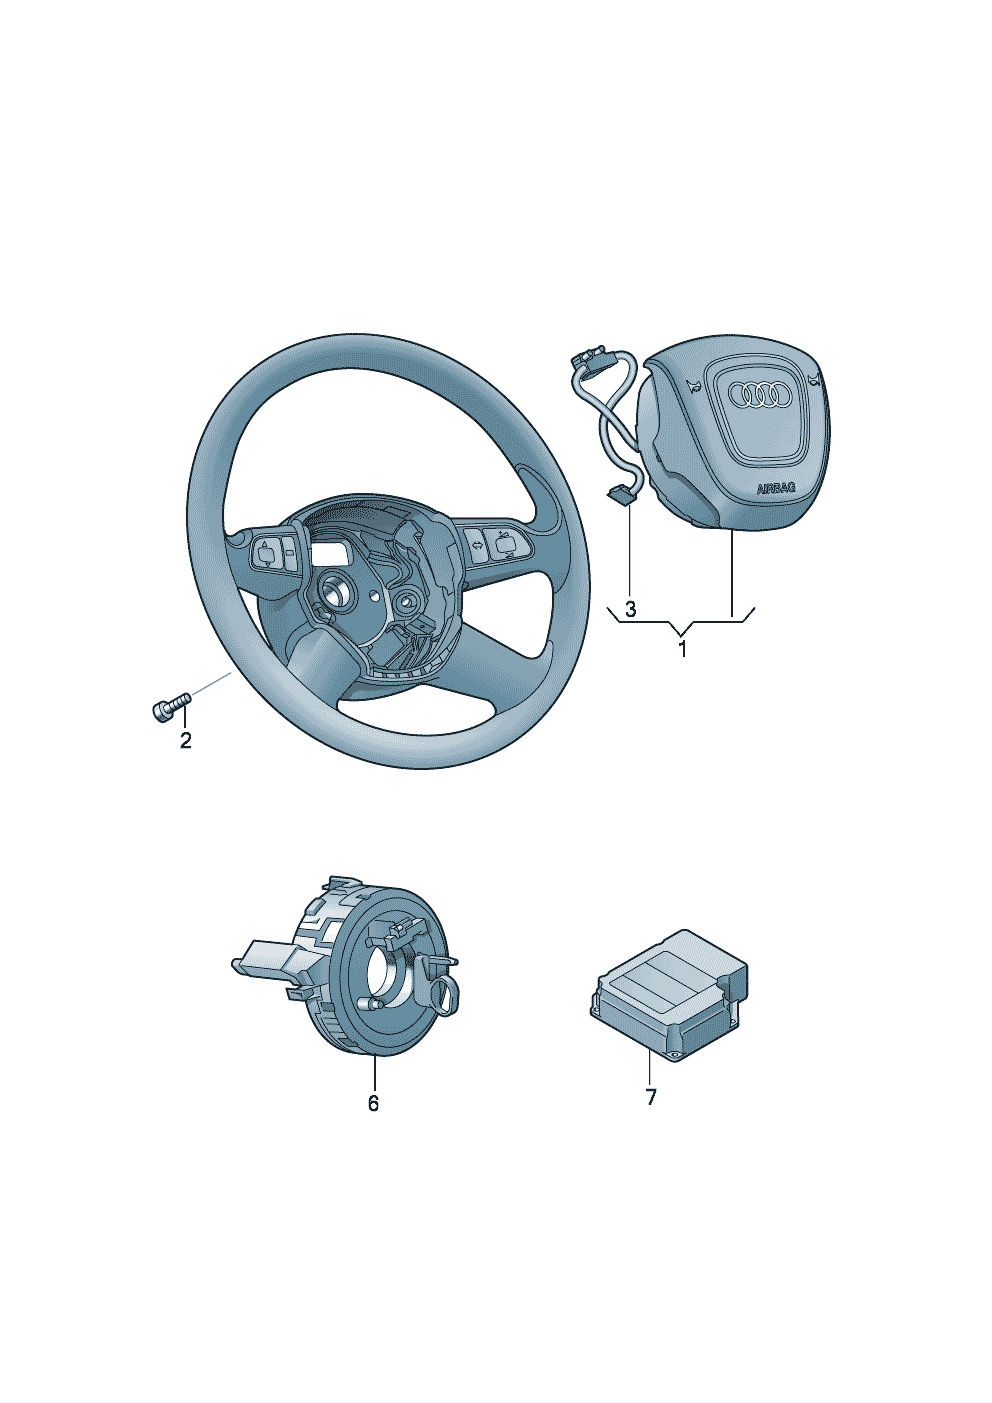 airbag unit for steering wheel<br><br/><br/><br/><br/><br/> Caution Hazardous <br/><br/><br/><br/><br/><br/><br>see workshop manual<br> D -    MJ 2012>> - 07.11.2011  - Audi Q7 - aq7